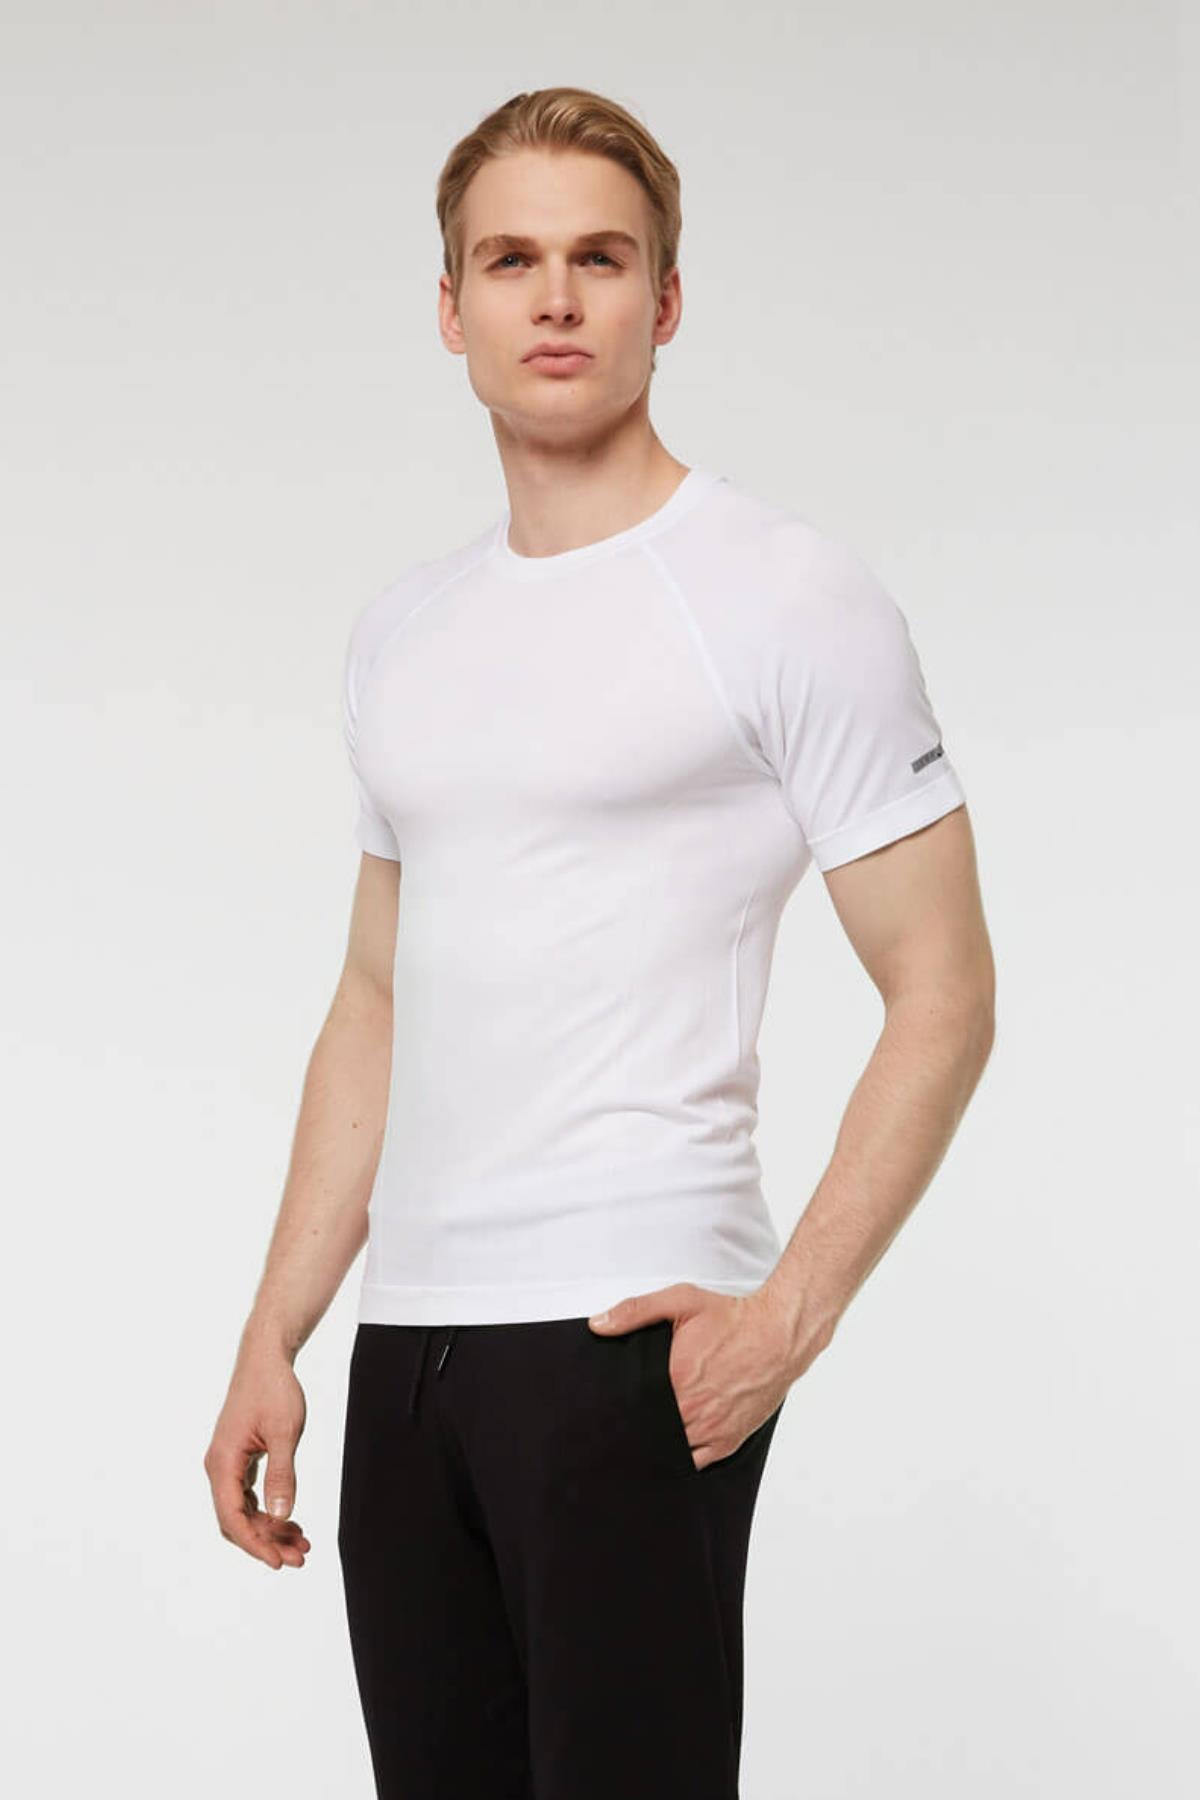 Jerf Provo T-Shirt Beyaz